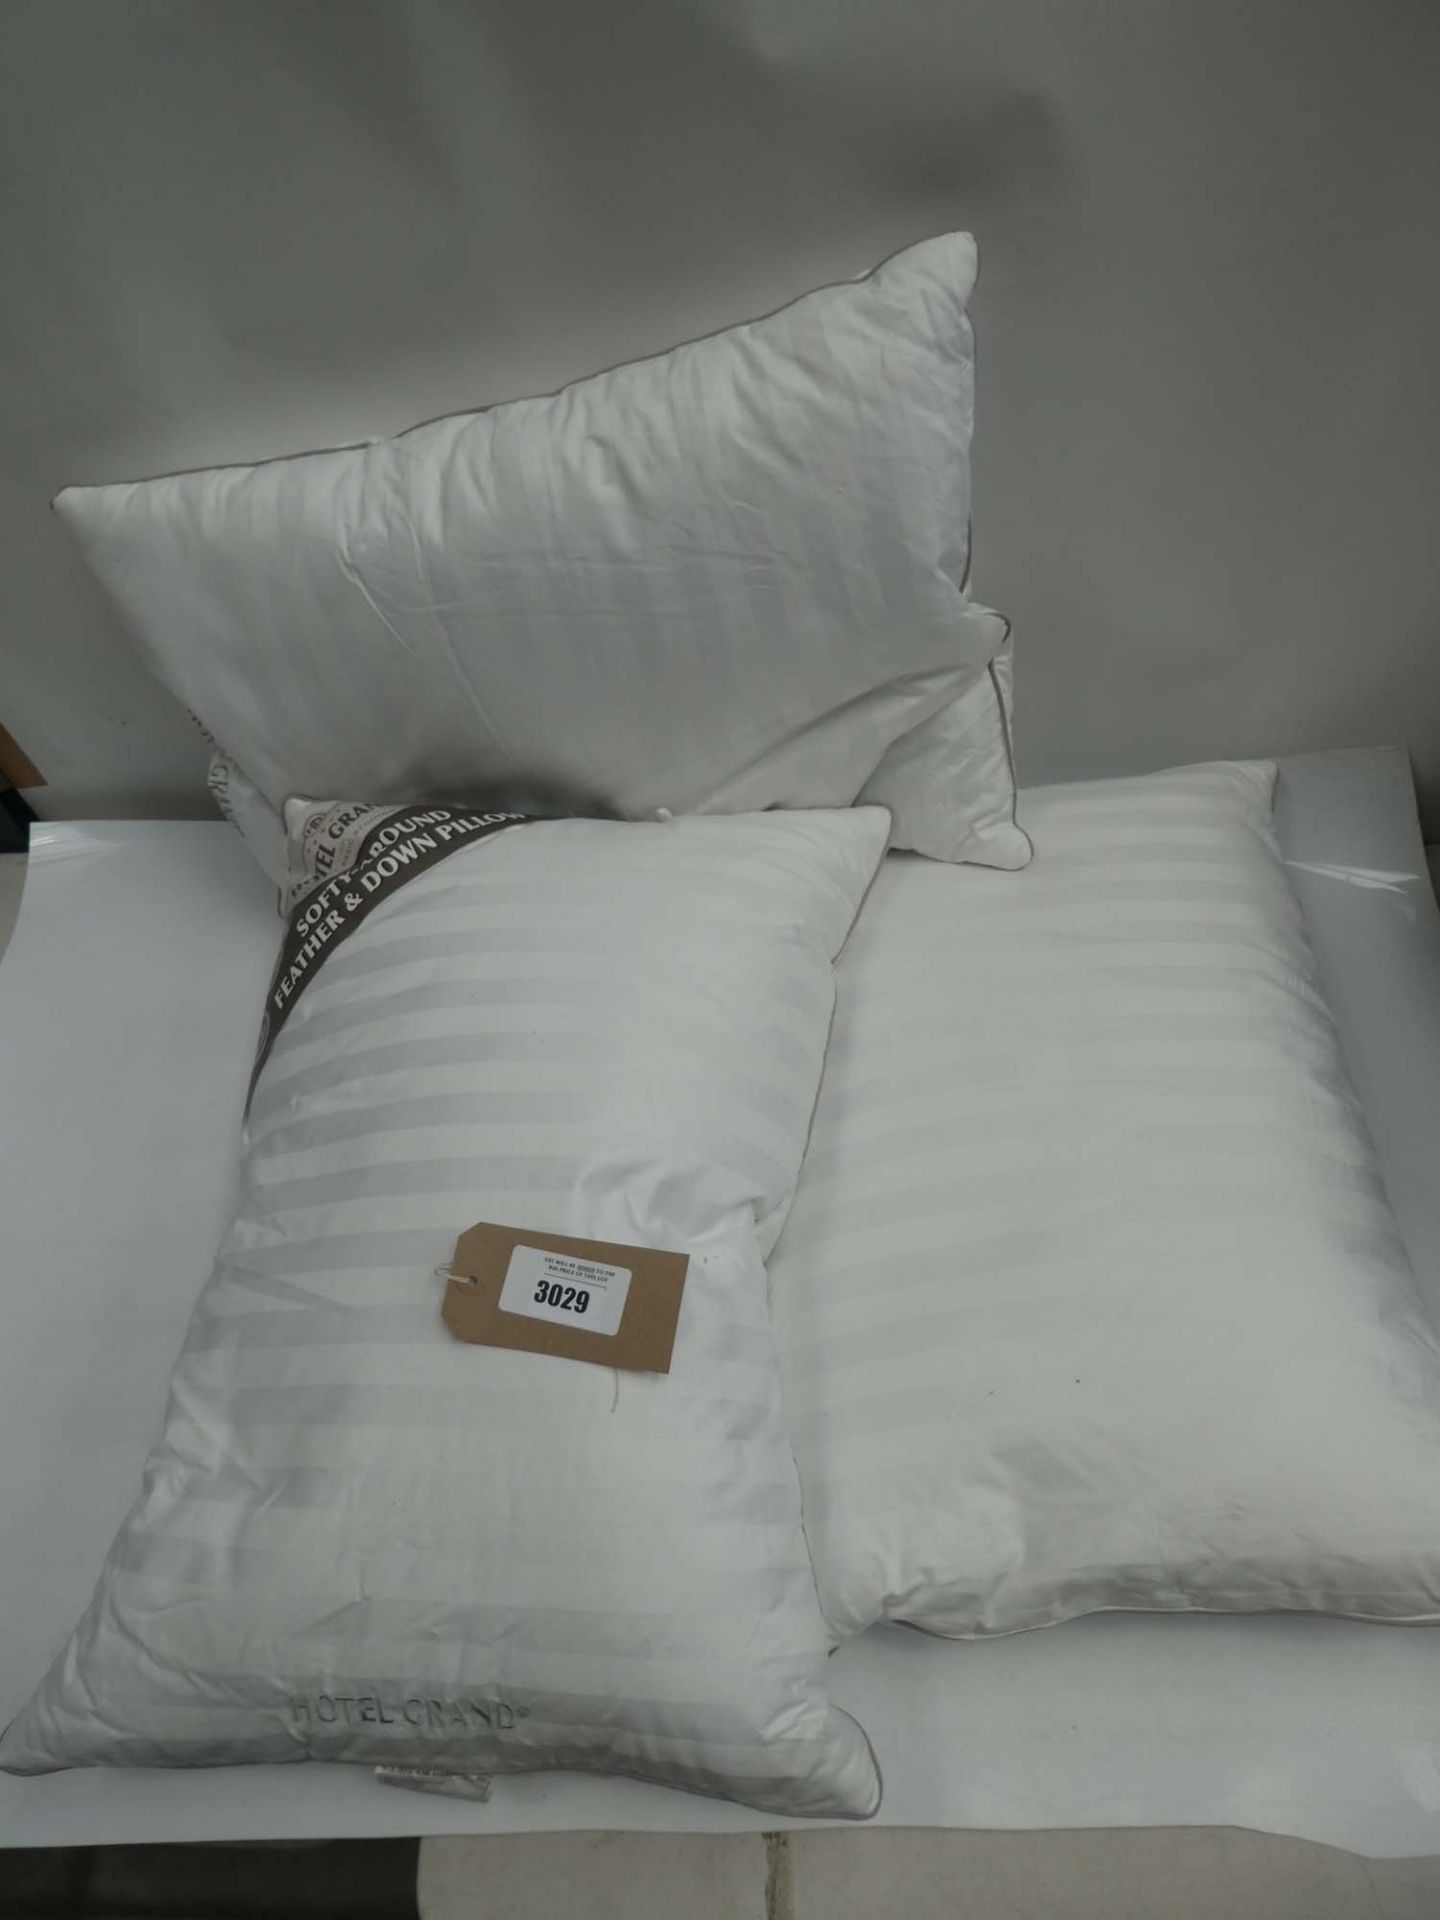 3 Hotel Grand pillows